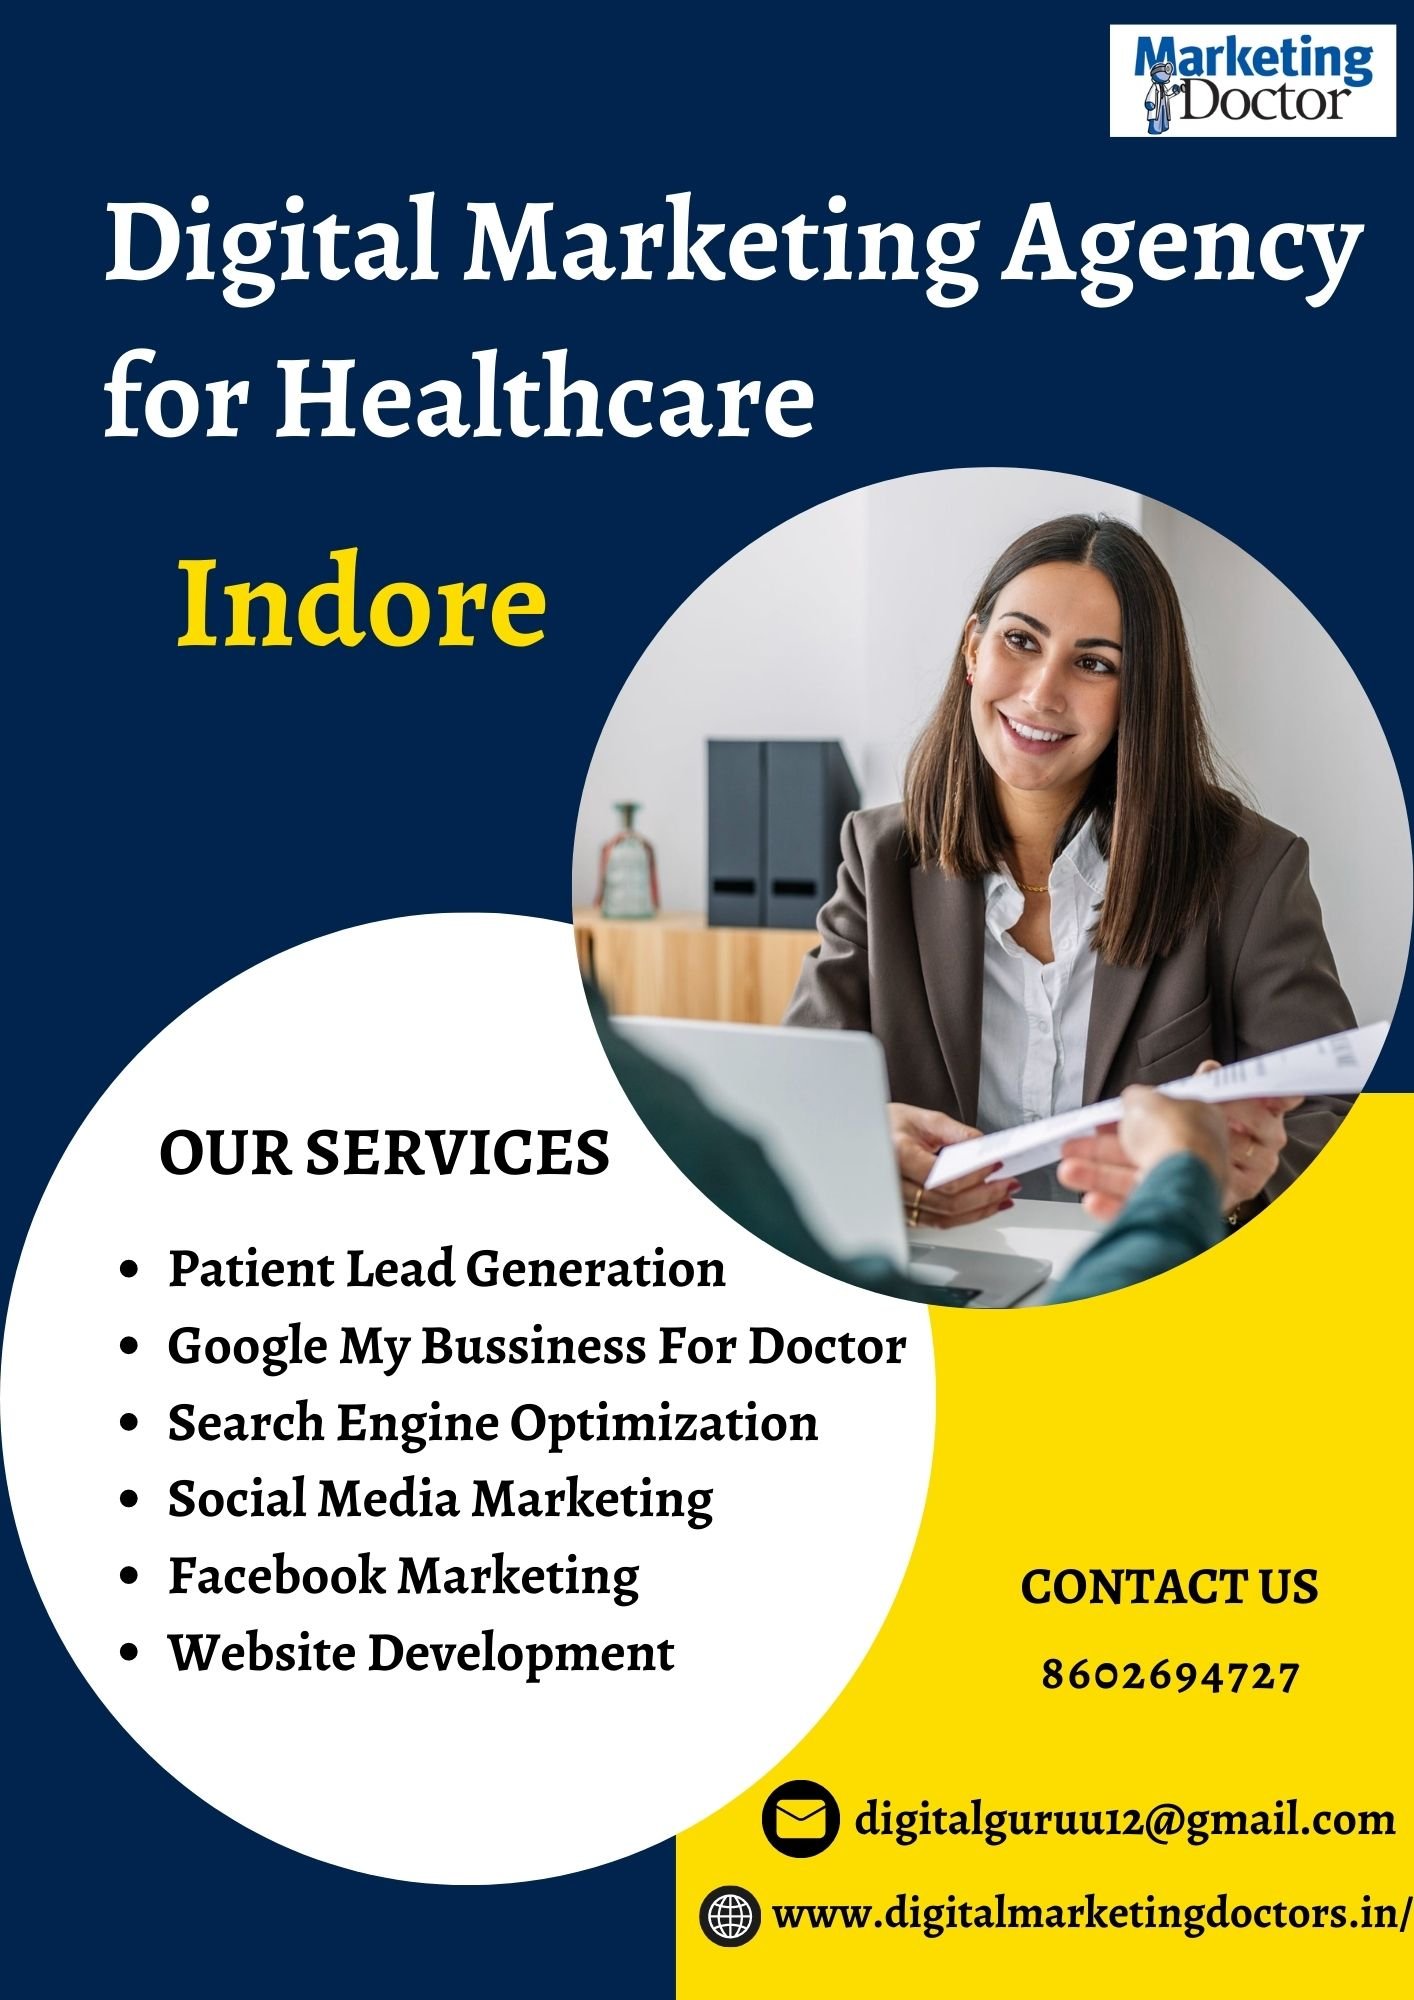 Digital Marketing for Doctors cover